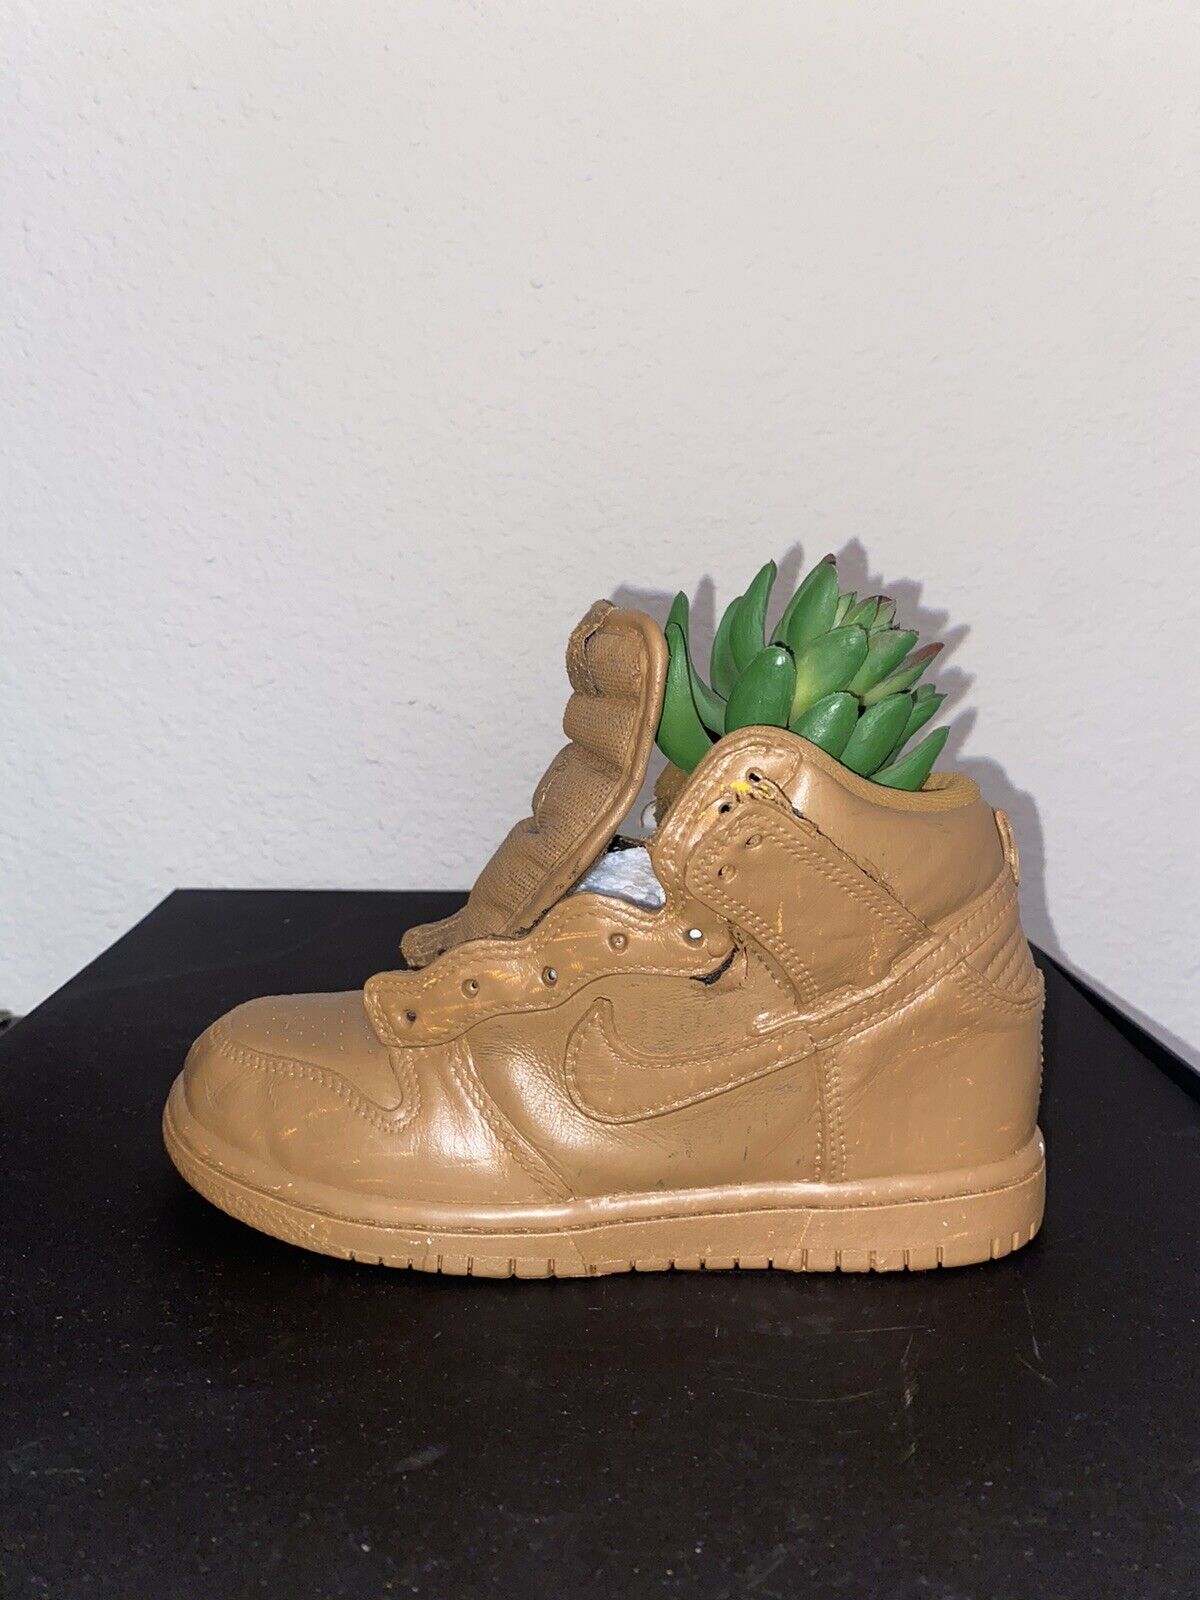 Sneaker Planter Vase Custom Shoe Planter Authentic Nike Dunk High PS painted